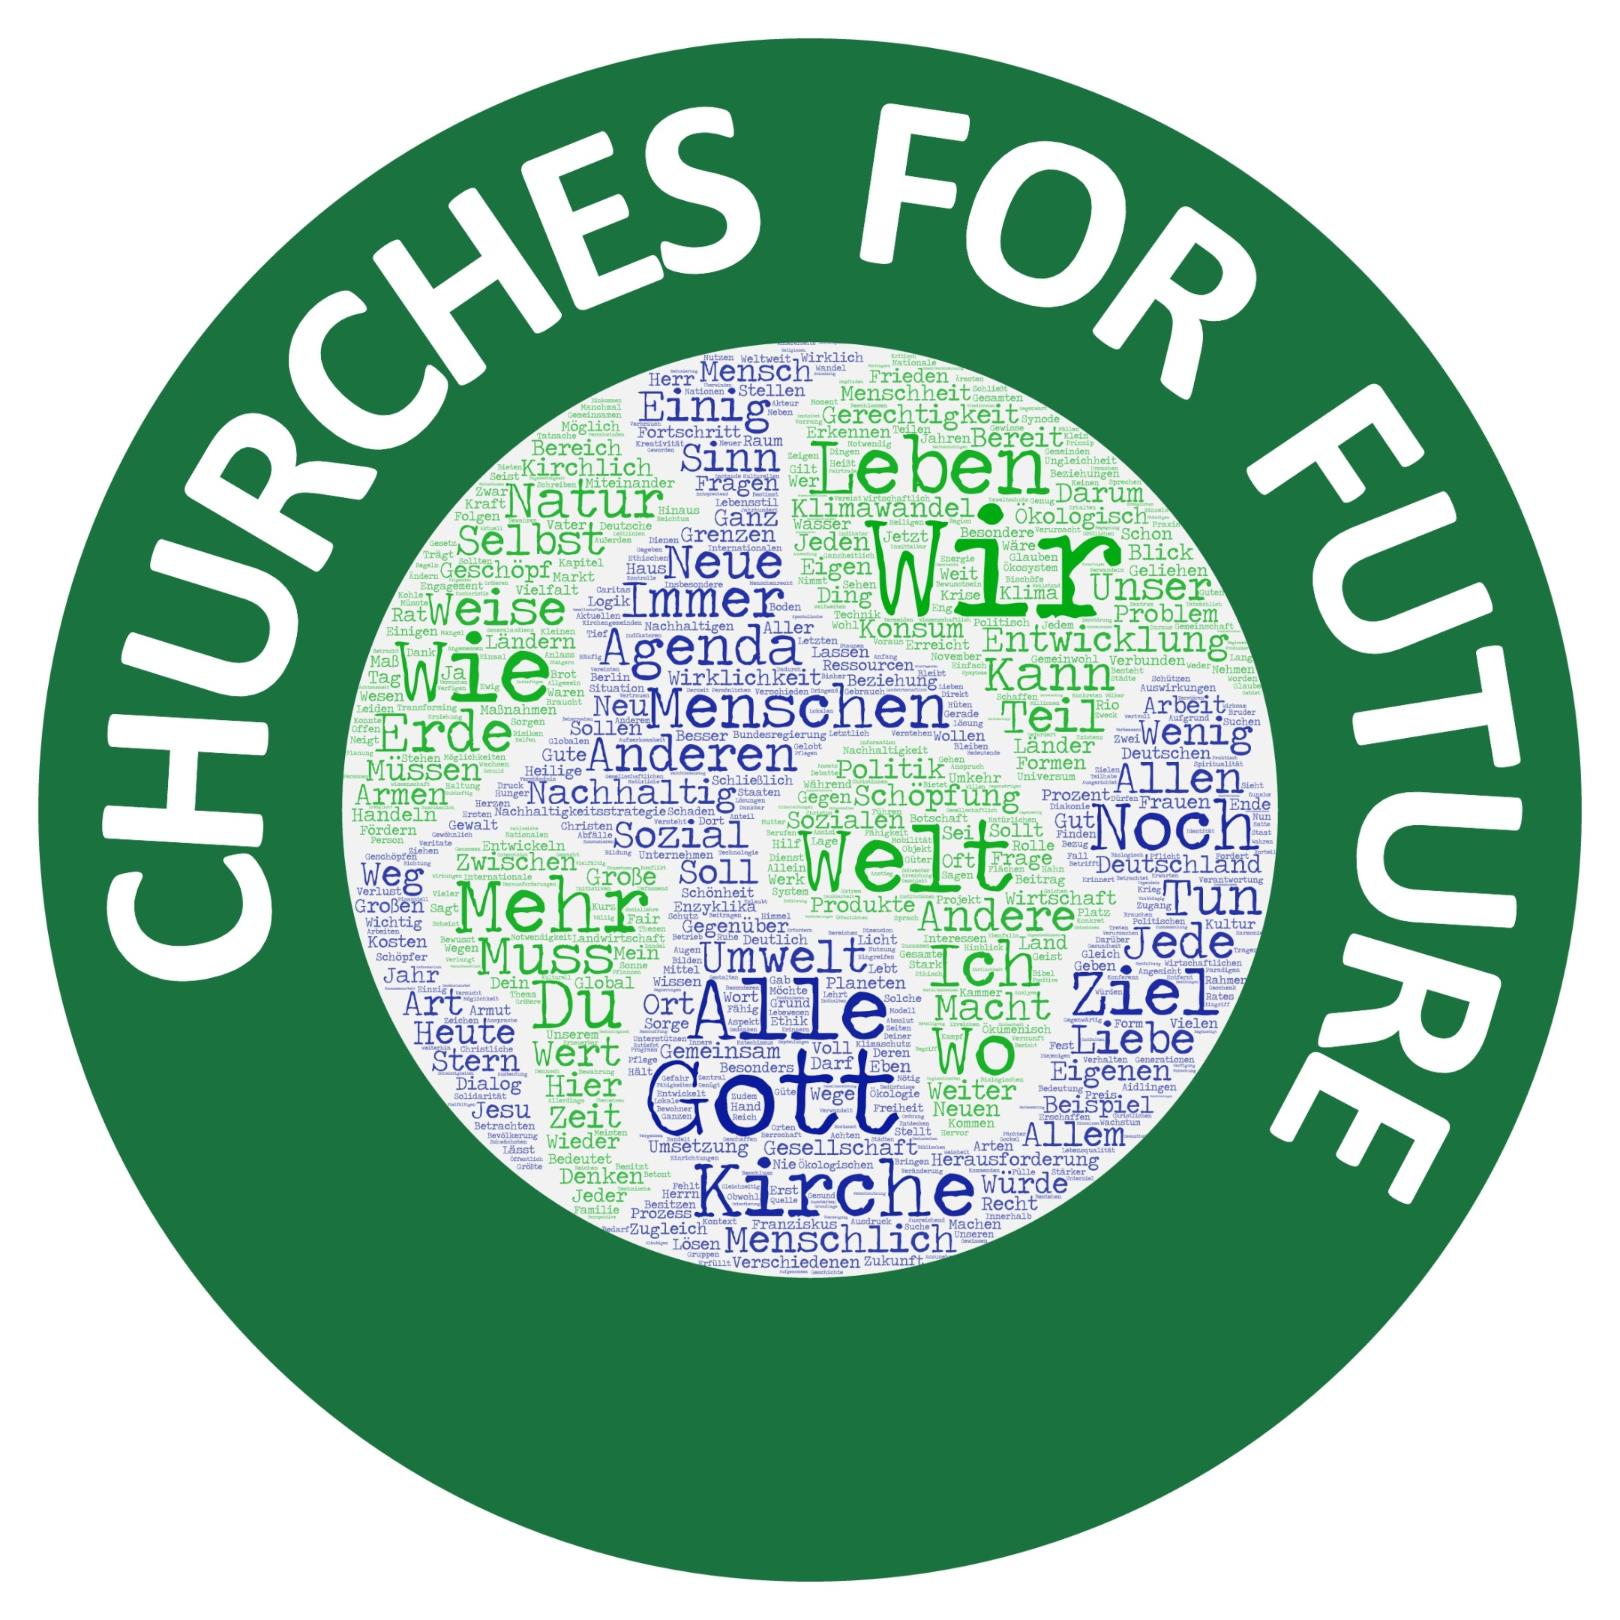 Churches_For_Future (c) Churches for Future